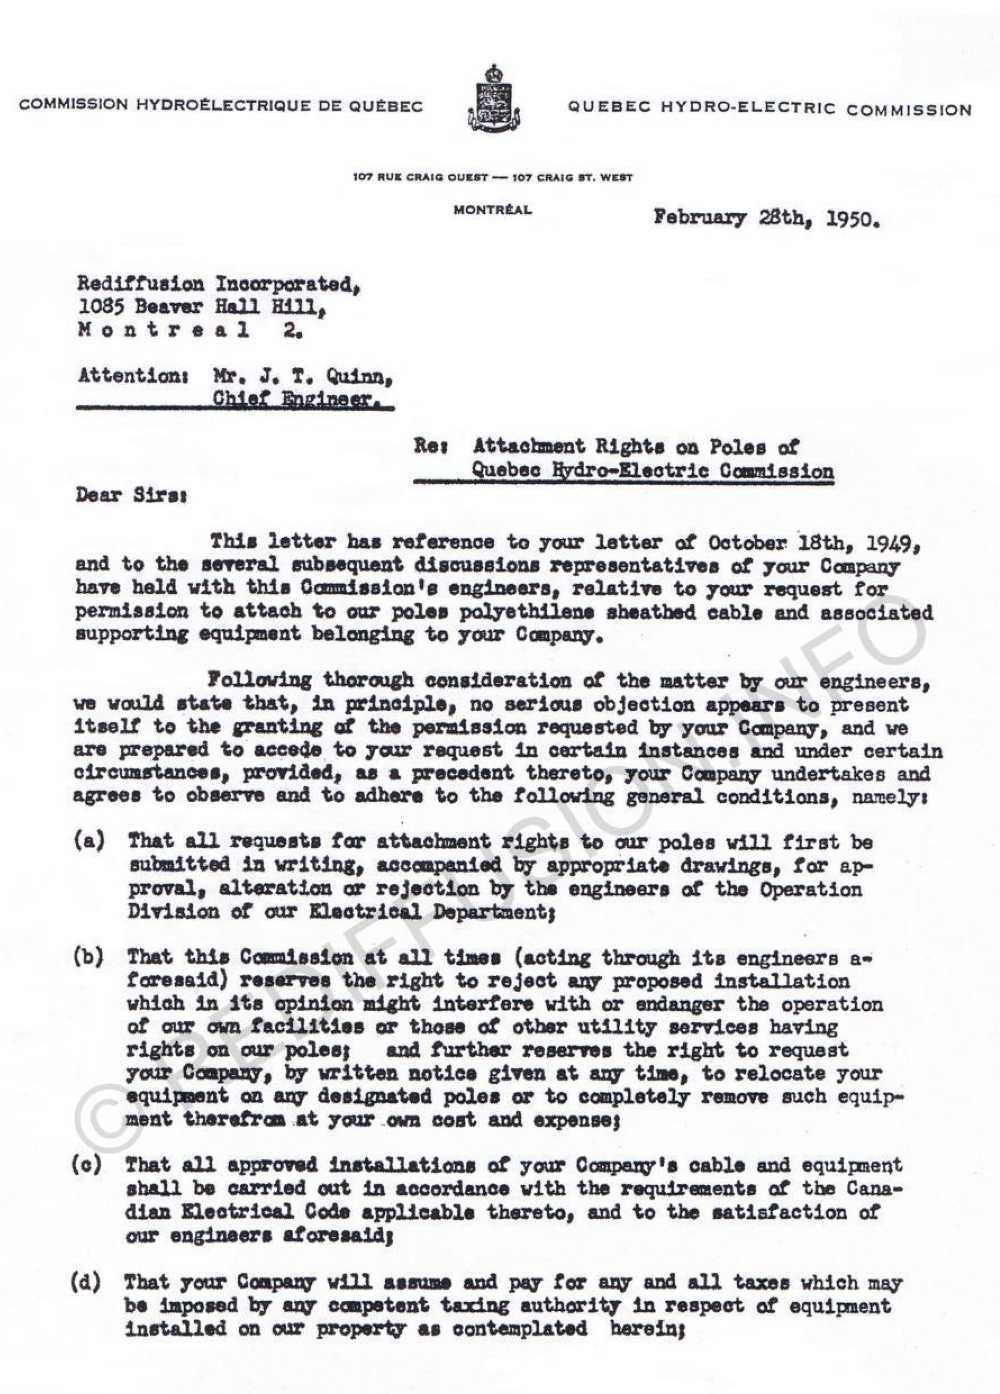 Agreement in Principle, Feb1950